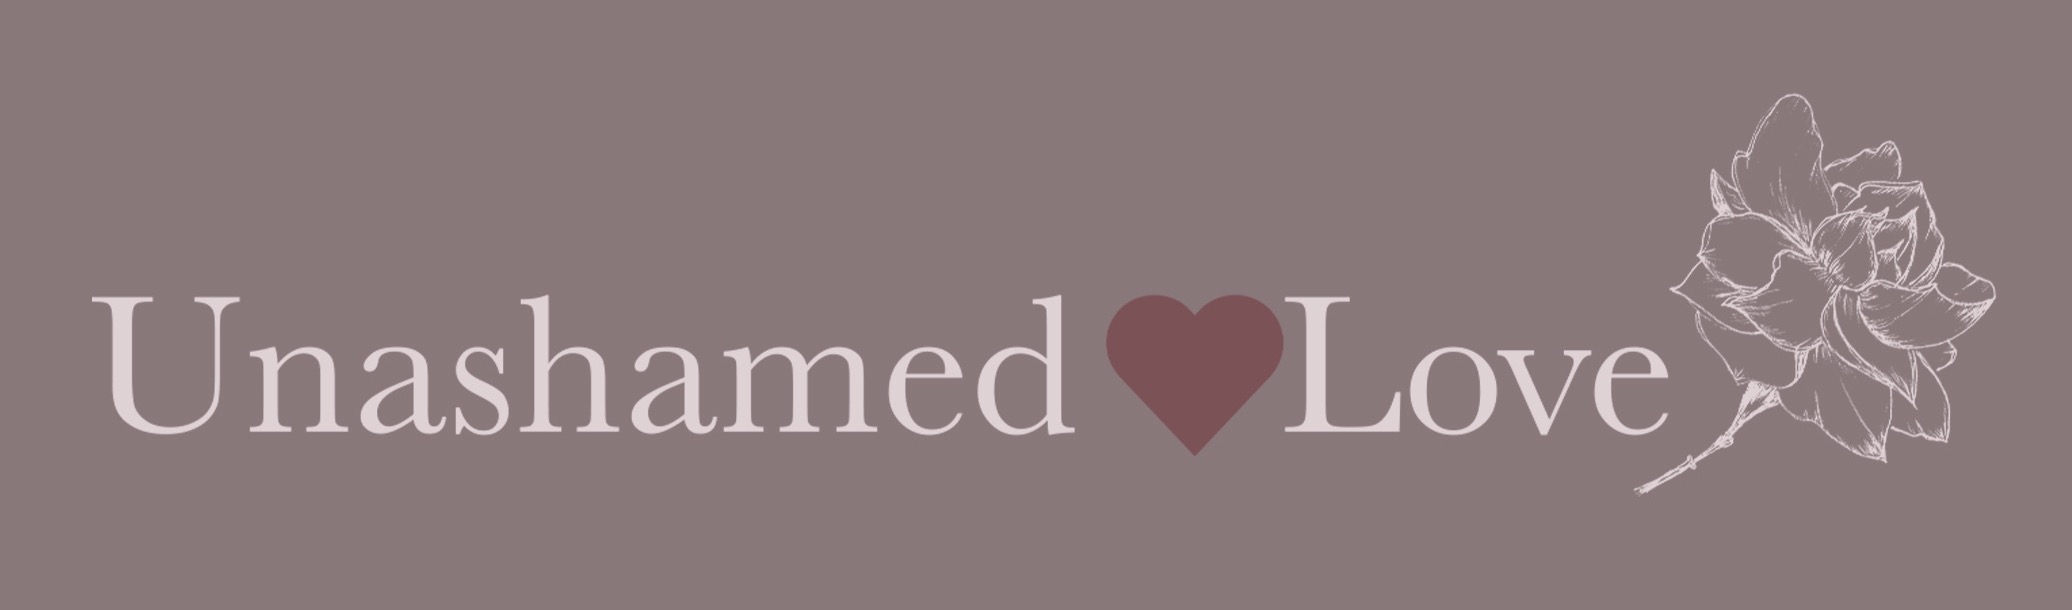 Unashamed Love logo